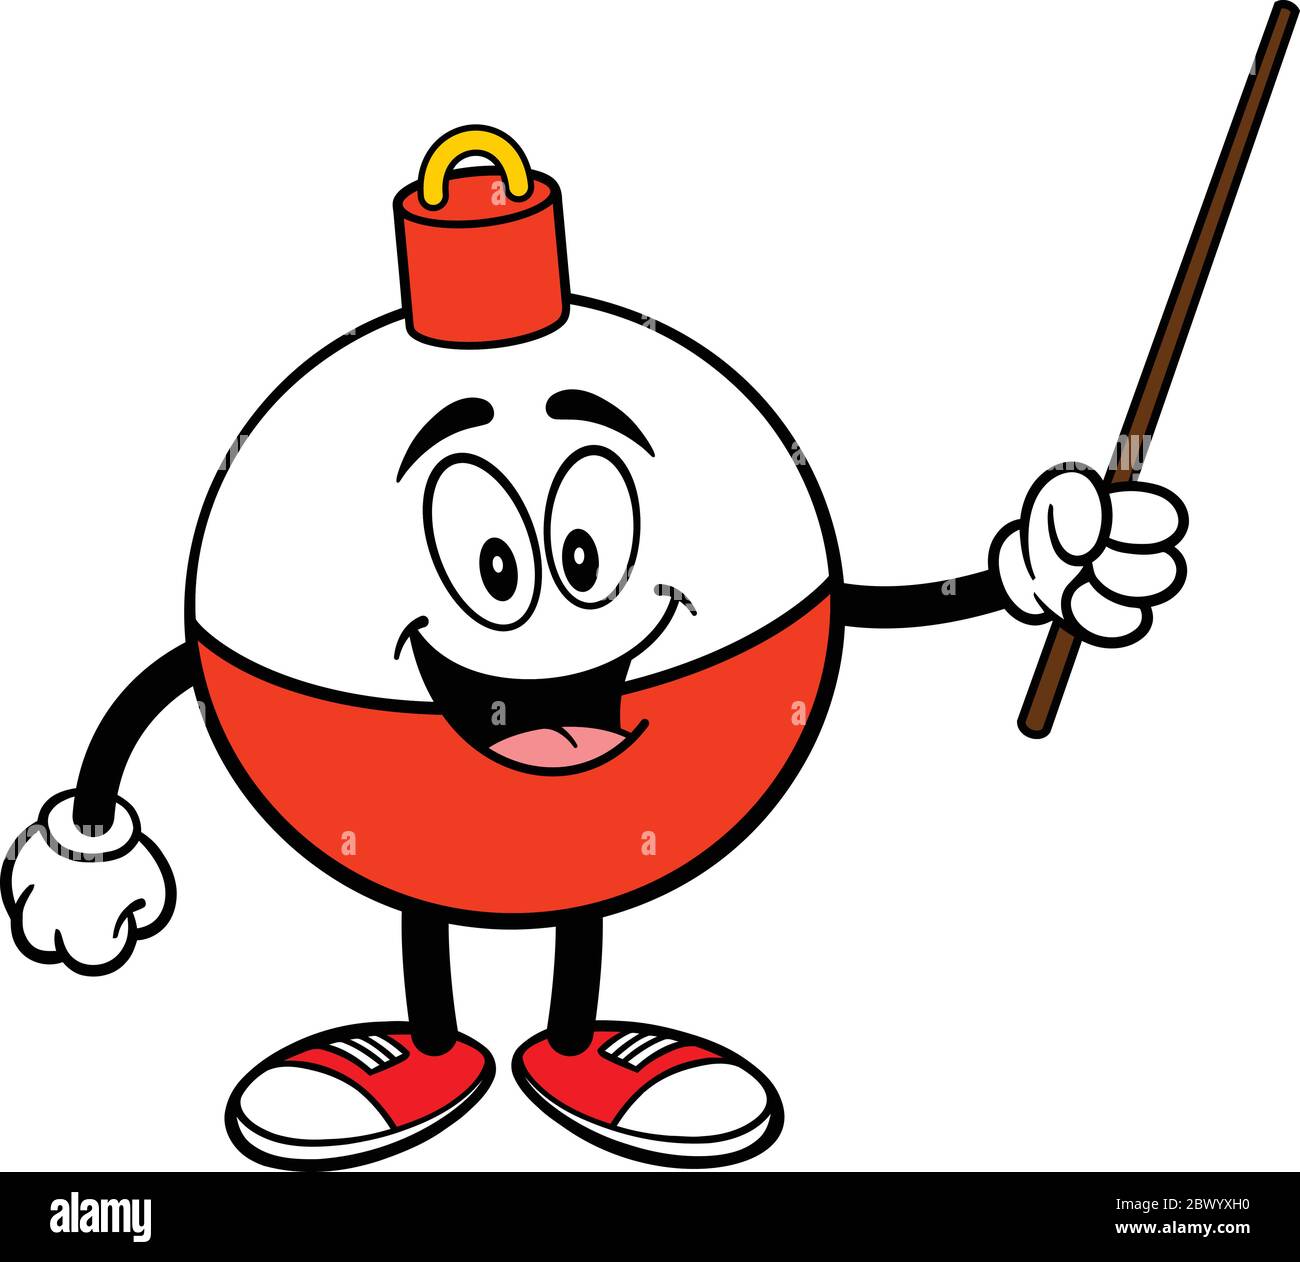 Fishing Bobber Mascot- A Cartoon Illustration of a Fishing Bobber